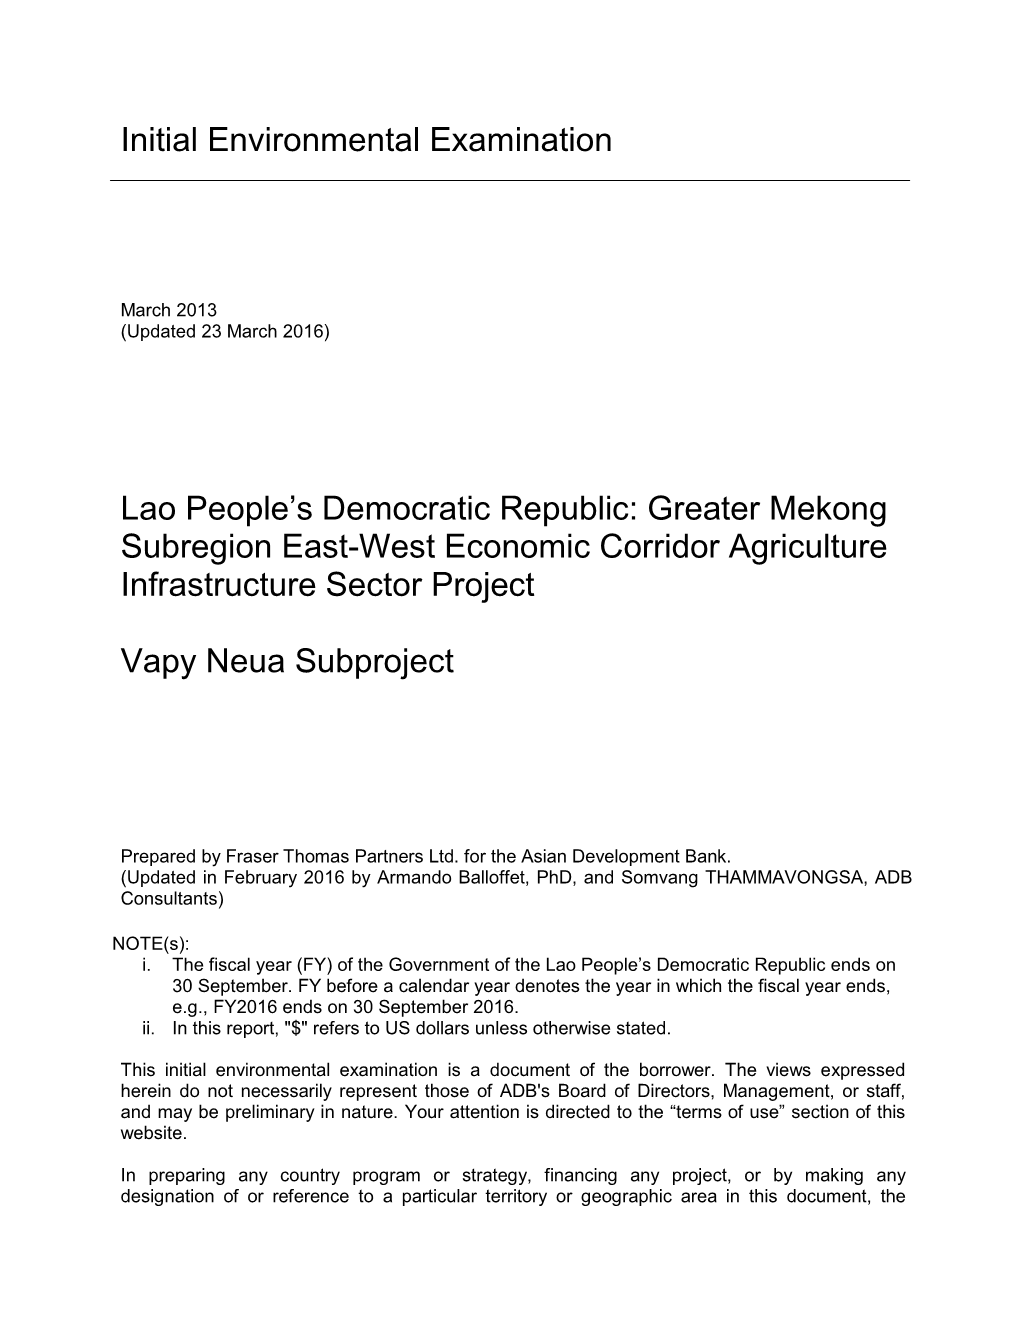 Initial Environmental Examination Lao People's Democratic Republic